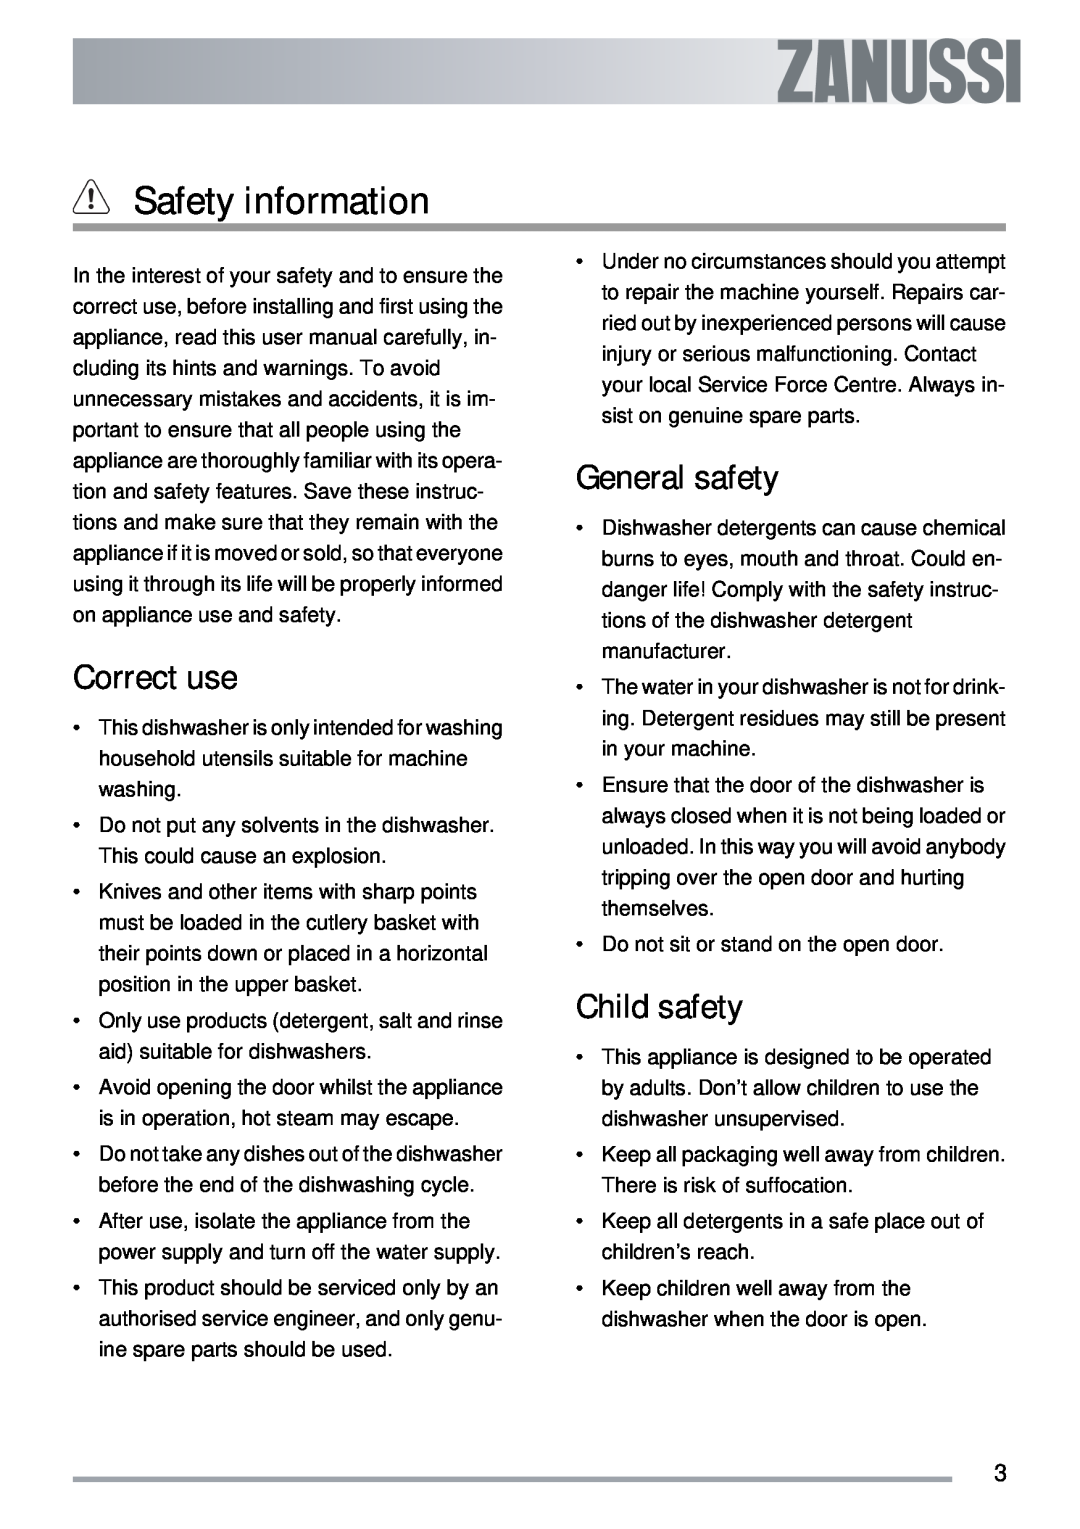 Zanussi ZDTS 101 user manual Safety information, Correct use, General safety, Child safety 